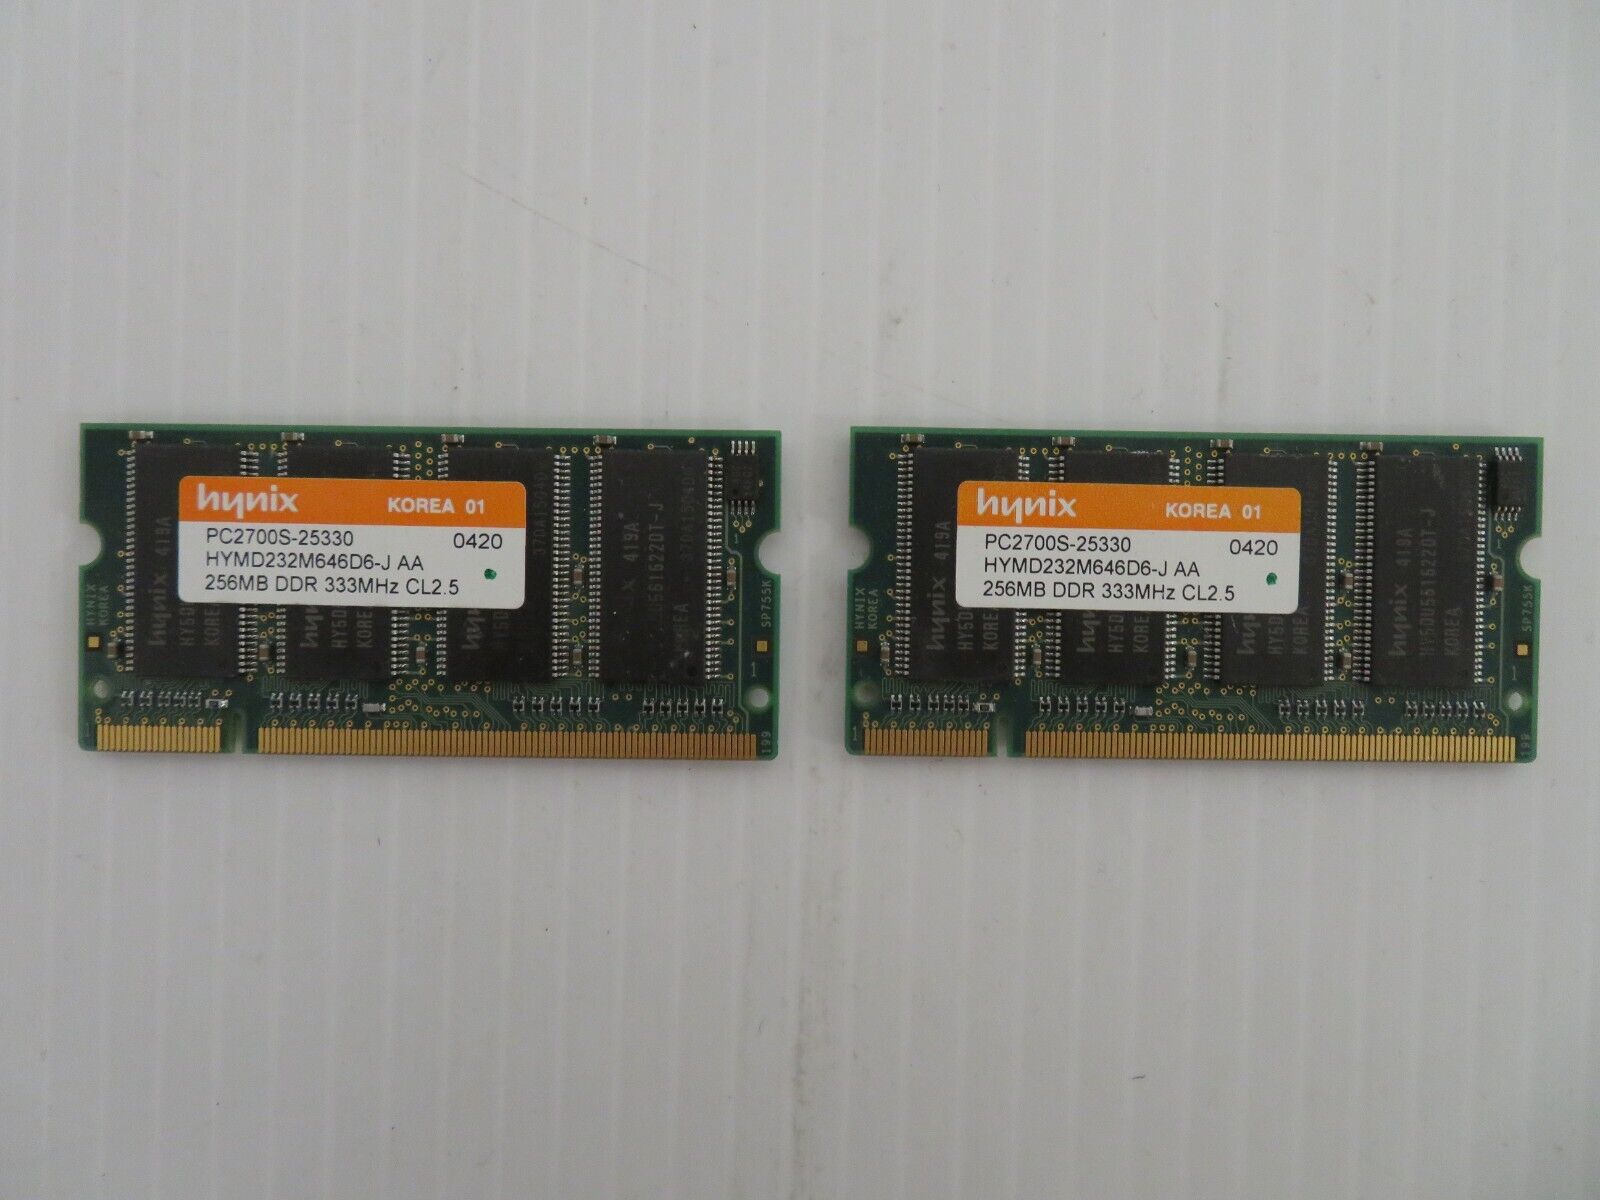 Hynix 512MB (2 x 256MB) DDR 333Mhz PC2700S RAM Memory Kit - hymd232m646d6-j